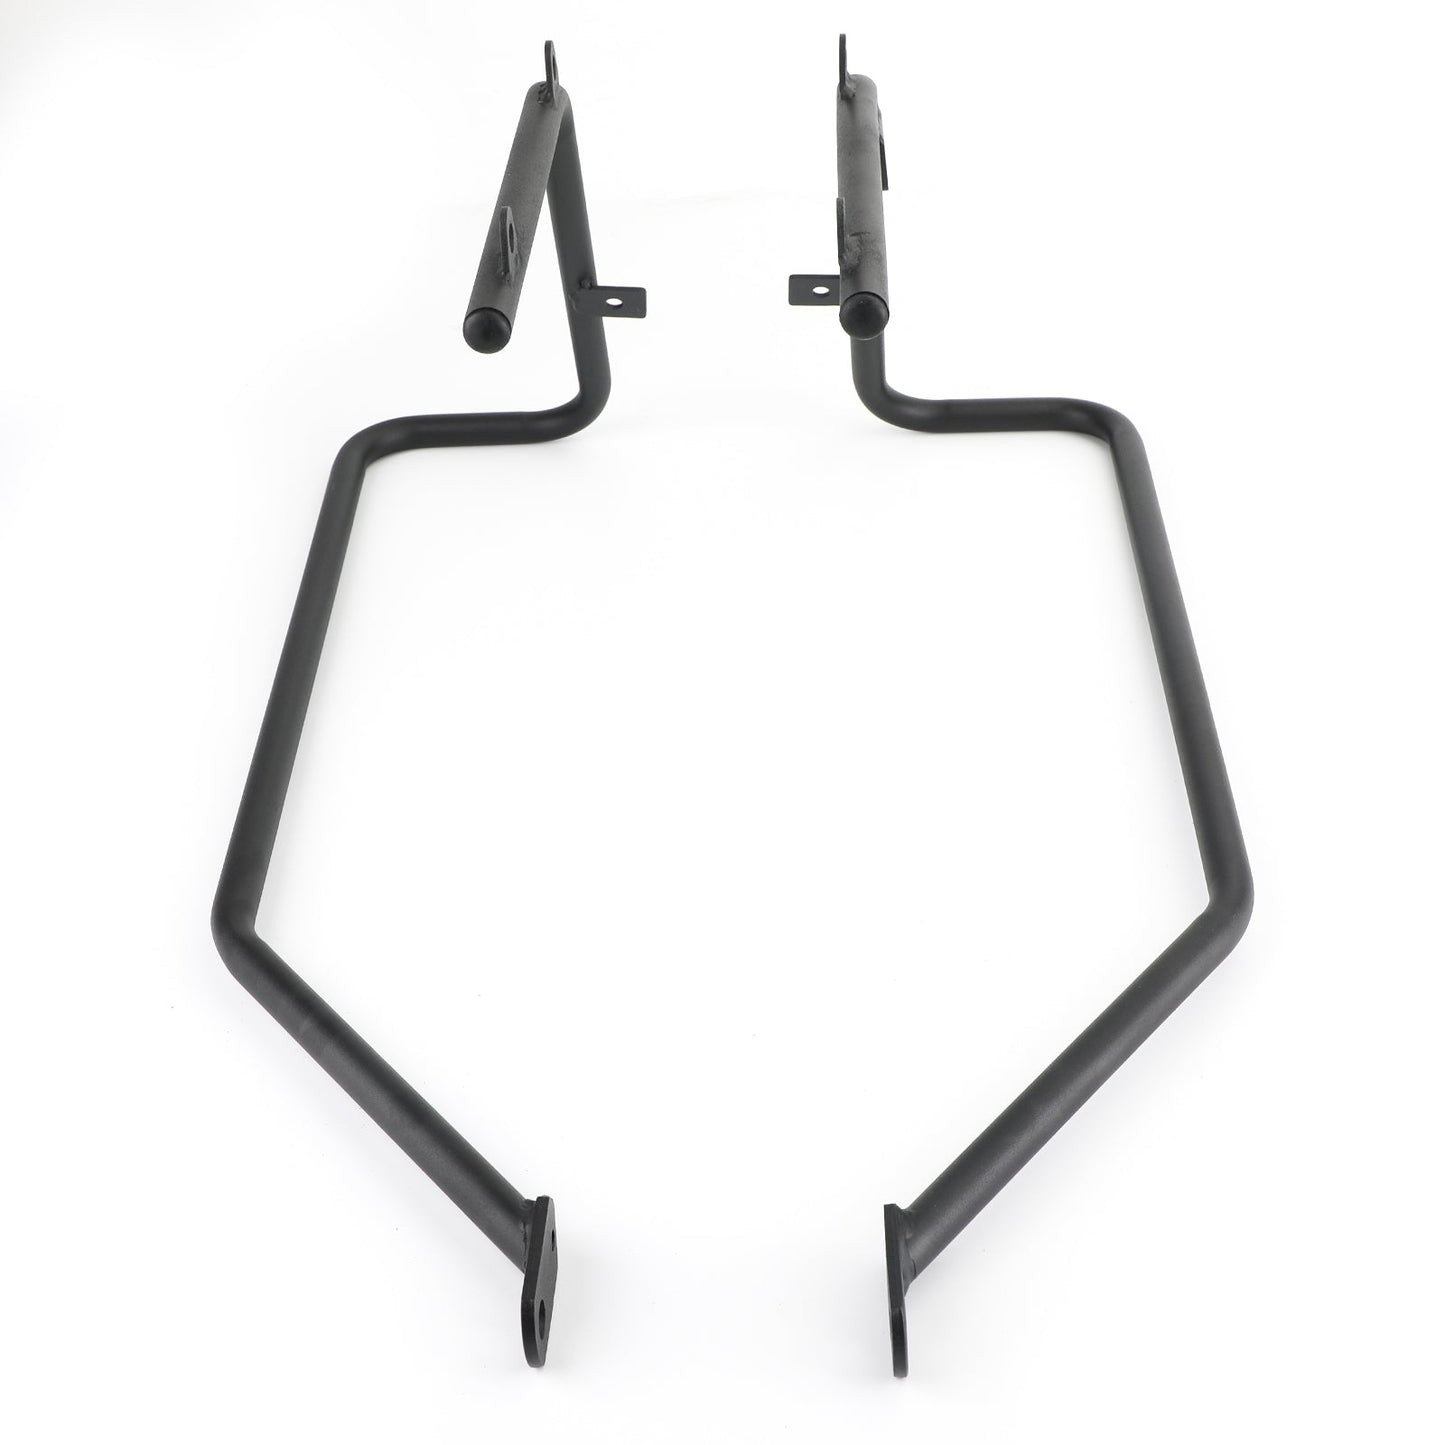 Saddlebag Conversion Brackets - Bagger Kit For Sportster XL883 XL1200 BLK